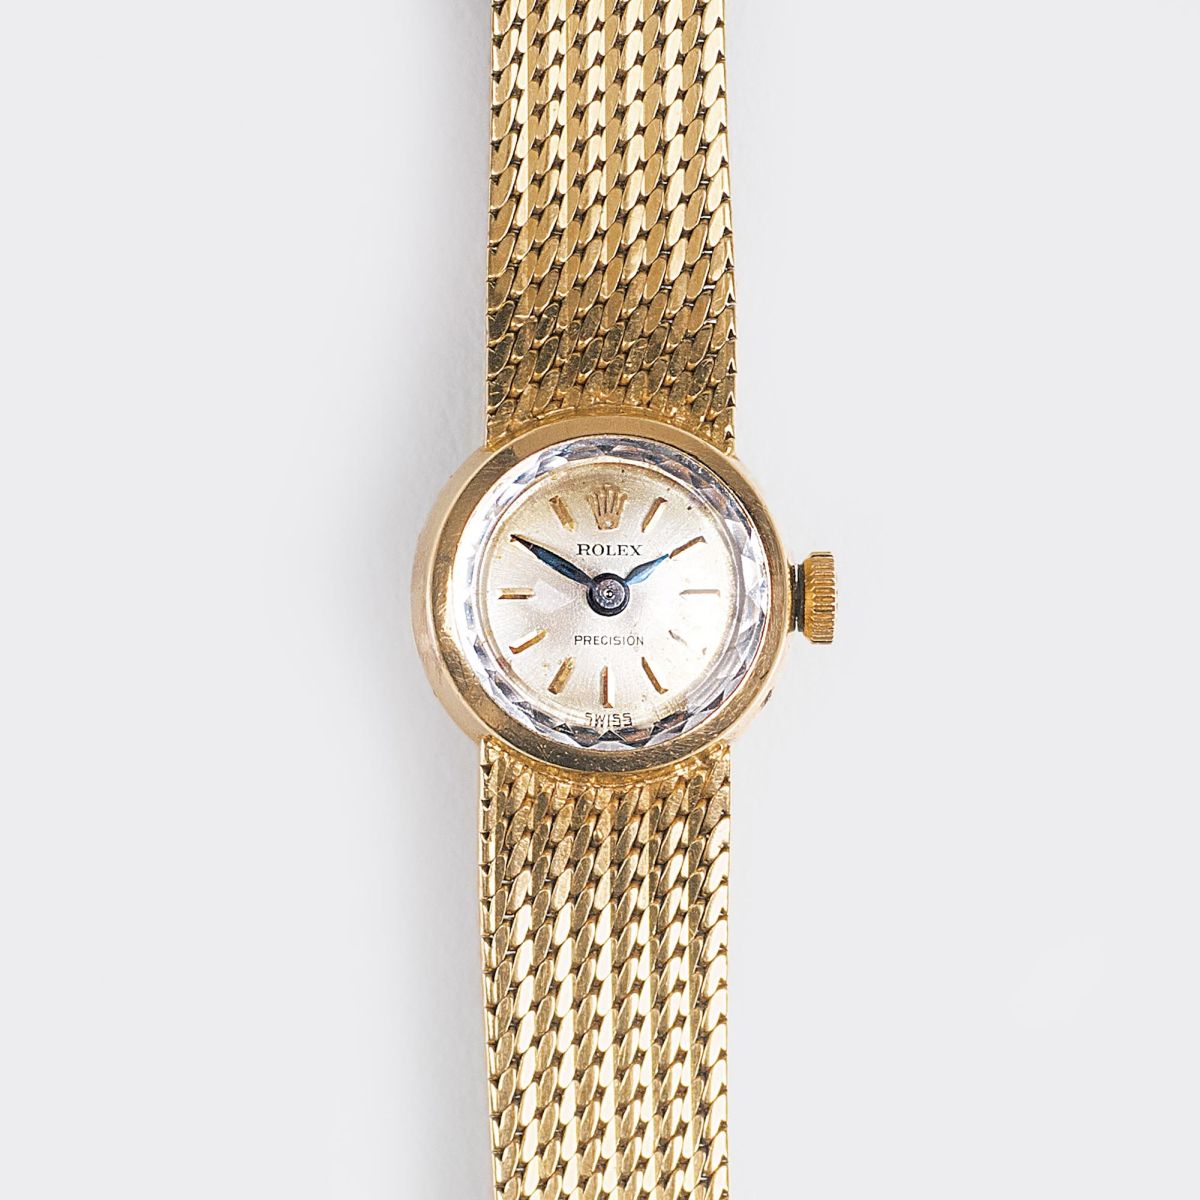 Vintage Damen-Armbanduhr 'Precision'